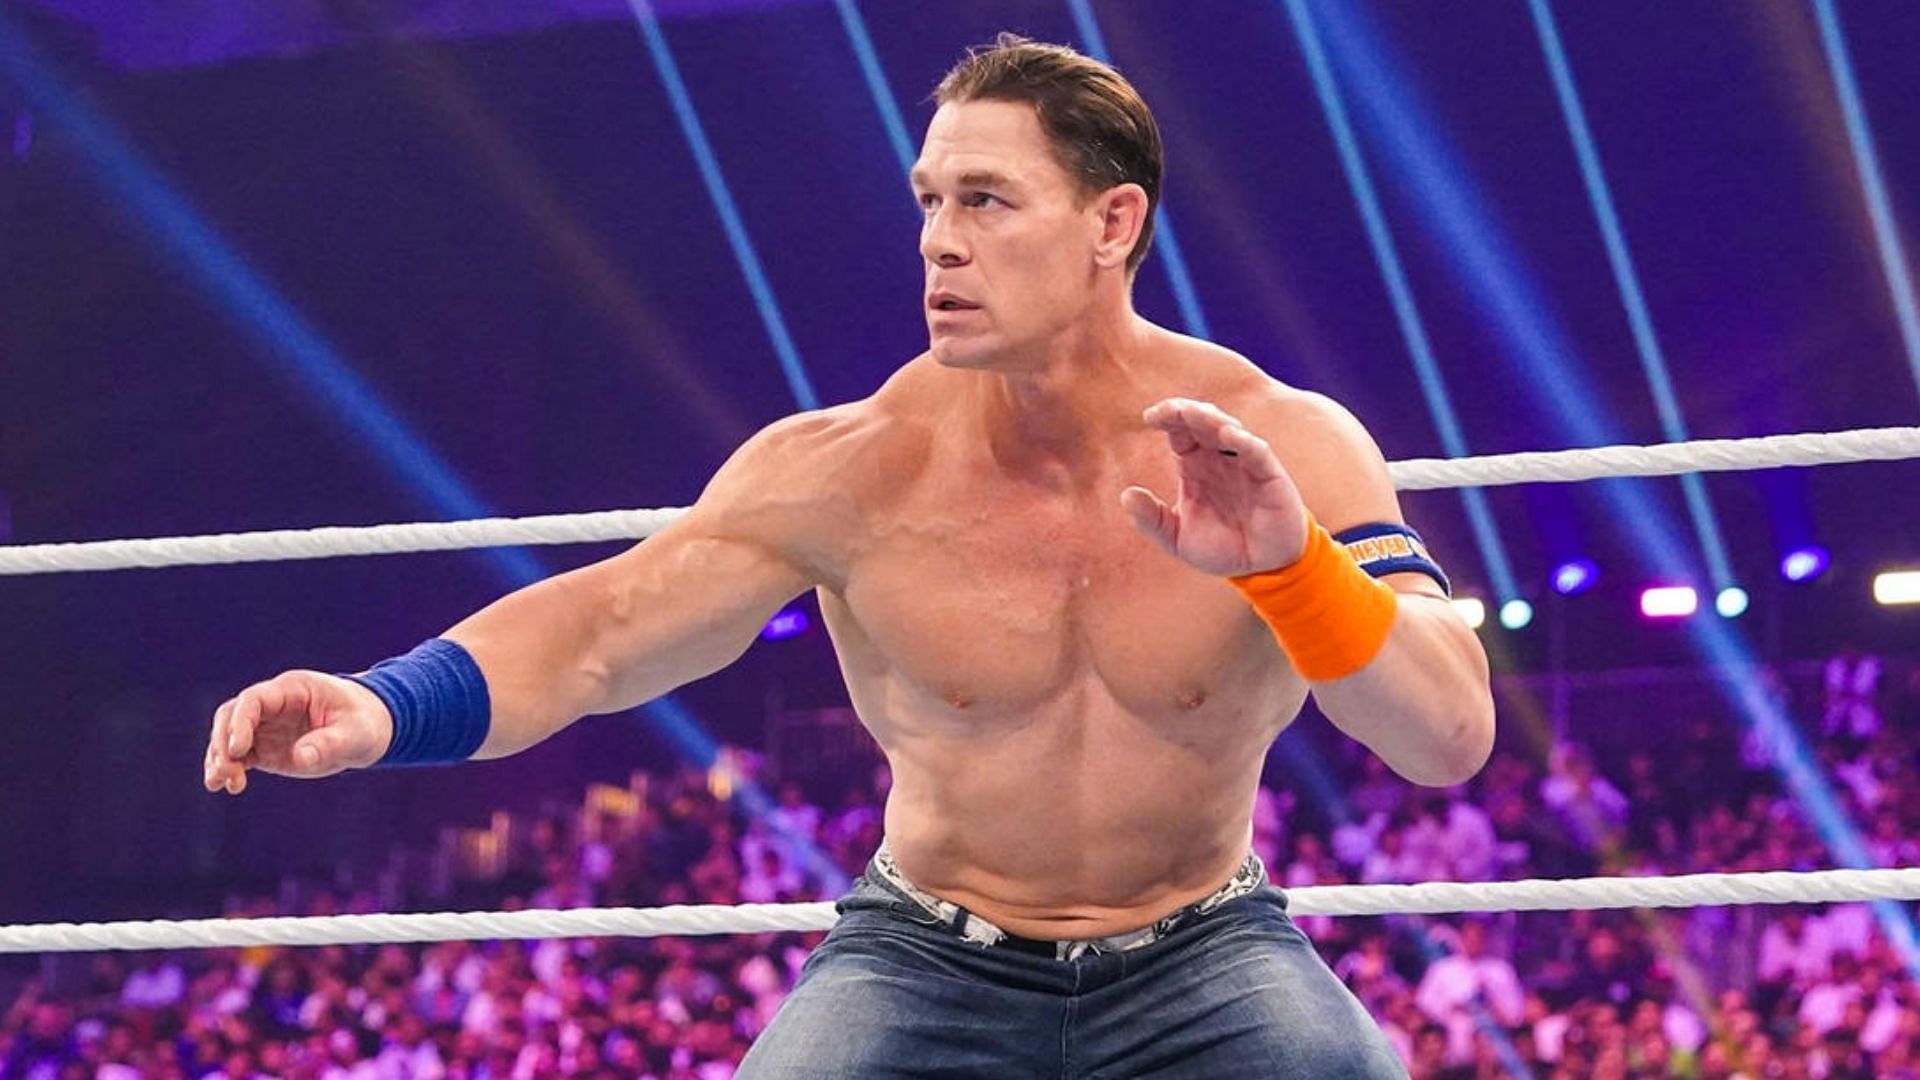 John Cena last wrestled at WWE Crown Jewel